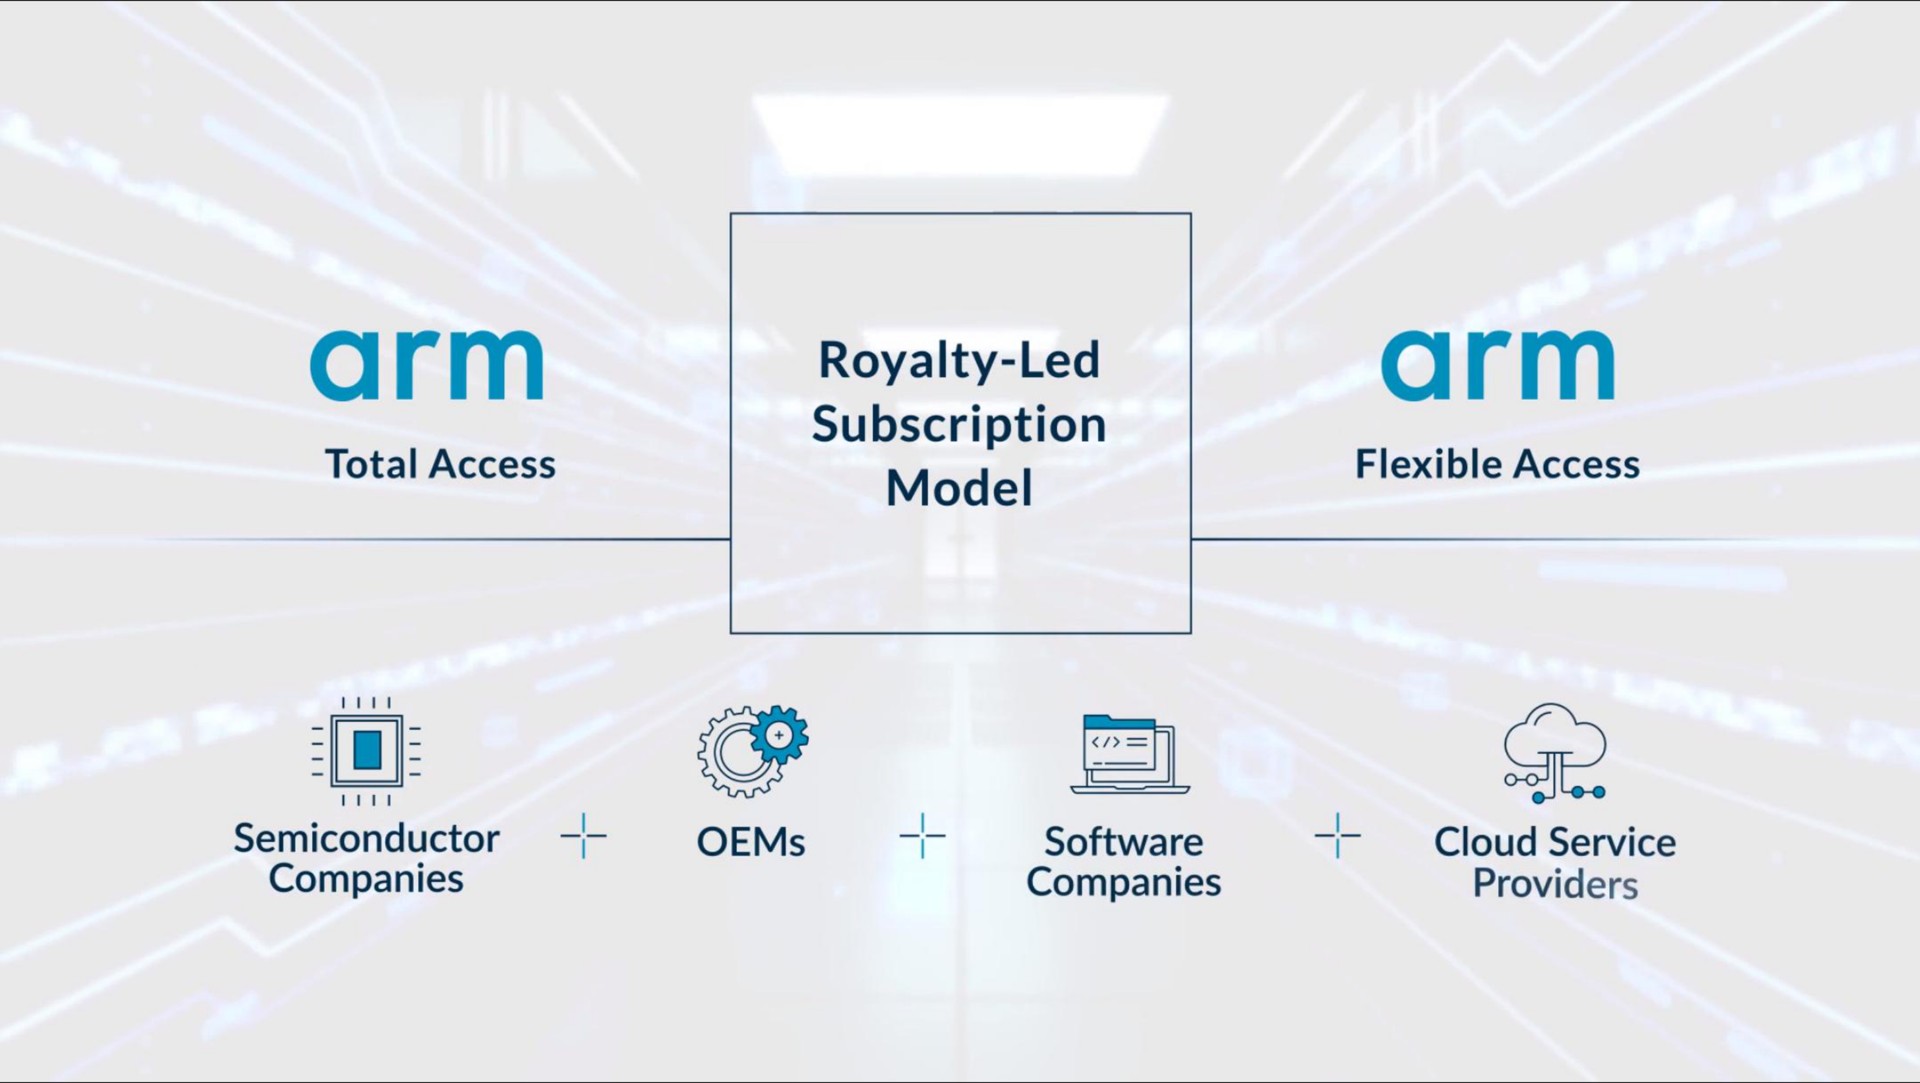 arm total access royalty led subscription flexible access companies companies cloud service providers | arm